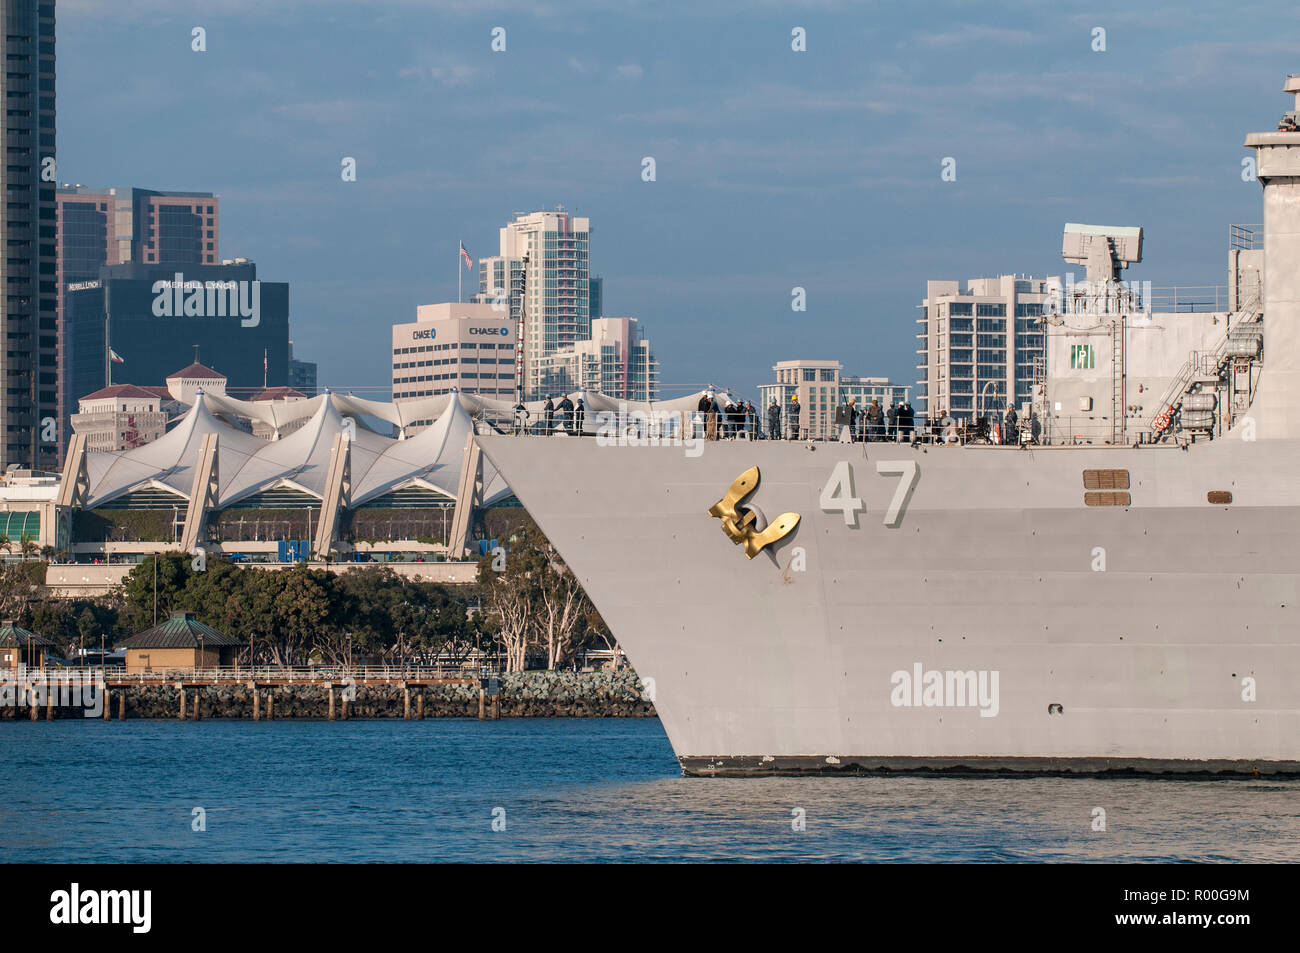 San diego naval base fotografías e imágenes de alta resolución - Alamy